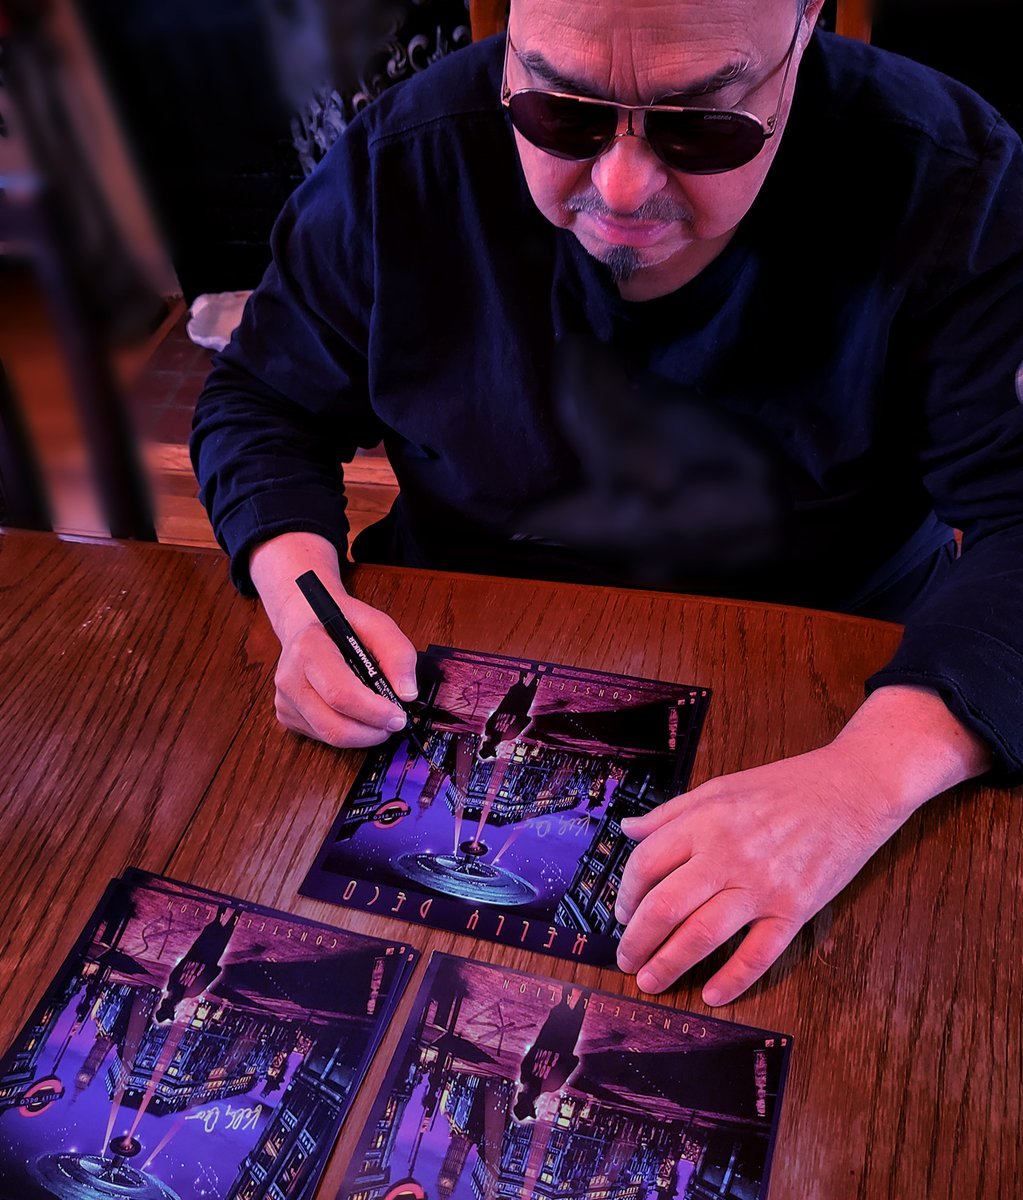 Famed artist Ioannis (Dream Theater, Deep Purple, Styx, etc....) signing his latest artwork for Deko Entertainment artist Kelly Deco.

dekoentertainment.com/kelly-deco

#IoannisArt #KellyDeco #DekoEntertainment #DreamTheater #DeepPurple #Styx #RockArt #AlbumArtwork #MusicArt